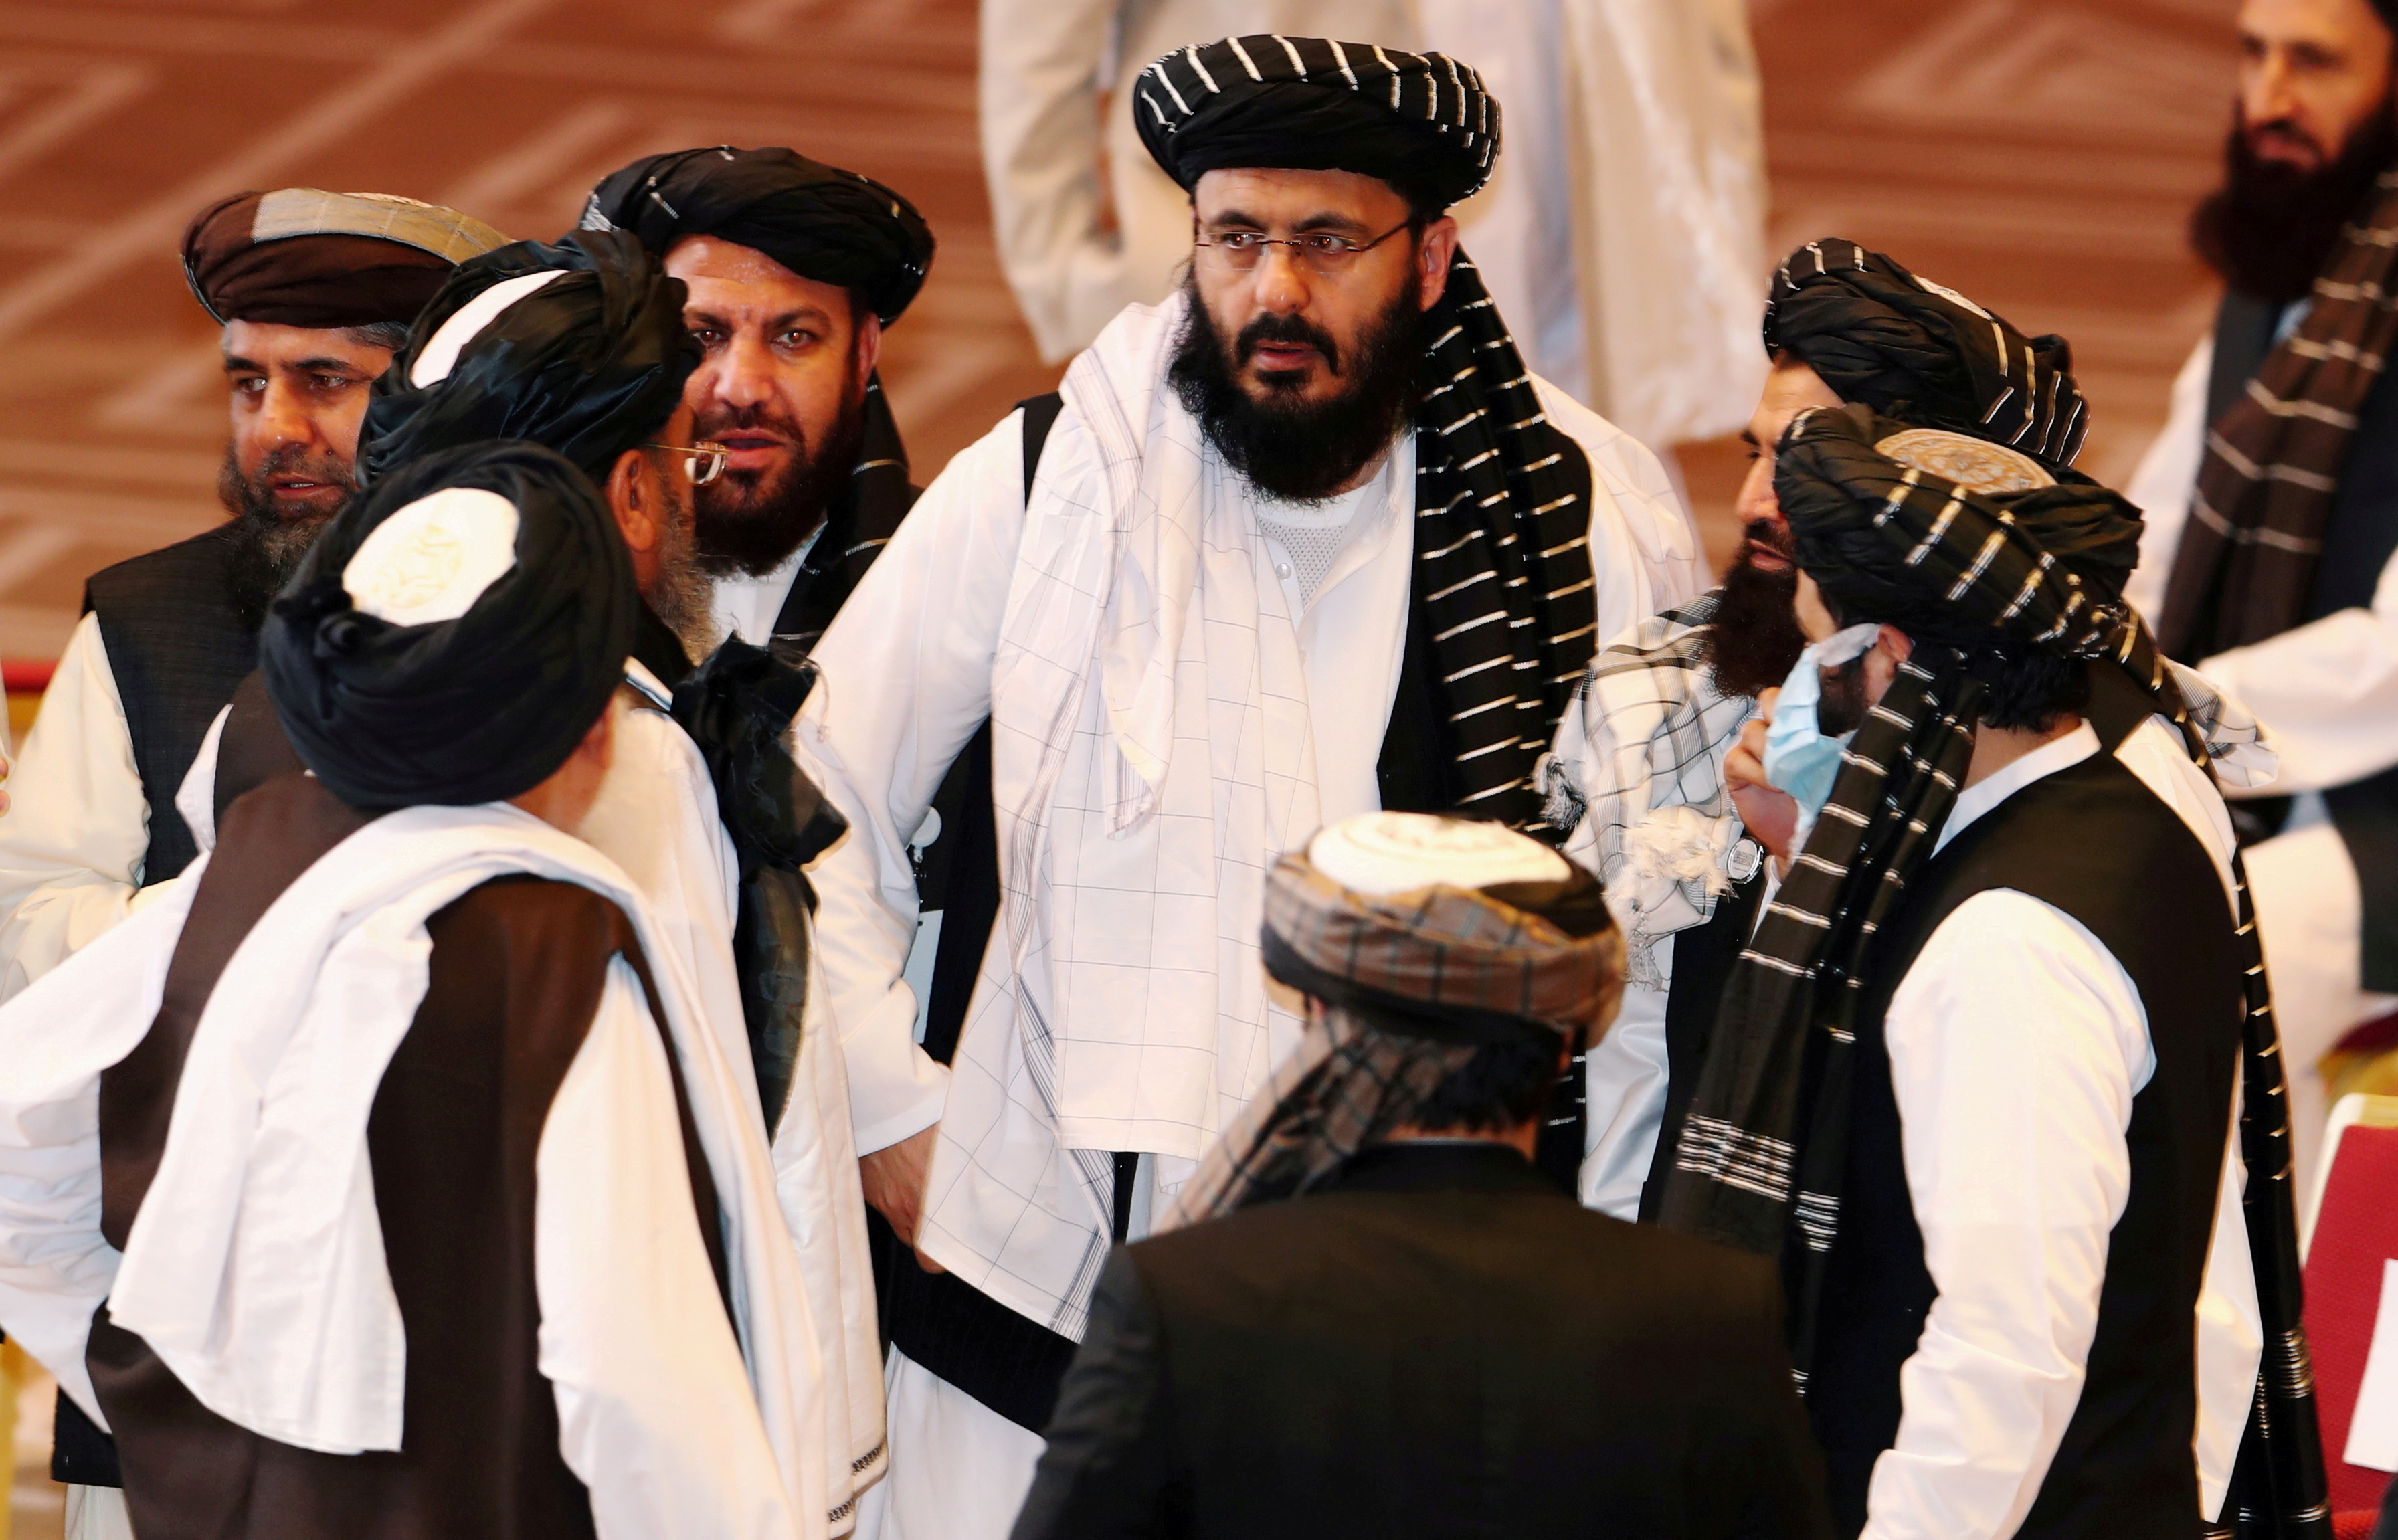 Taliban delegates speak during talks between the Afghan government and Taliban insurgents in Doha, Qatar September 12, 2020. REUTERS/Ibraheem al Omari/File Photo